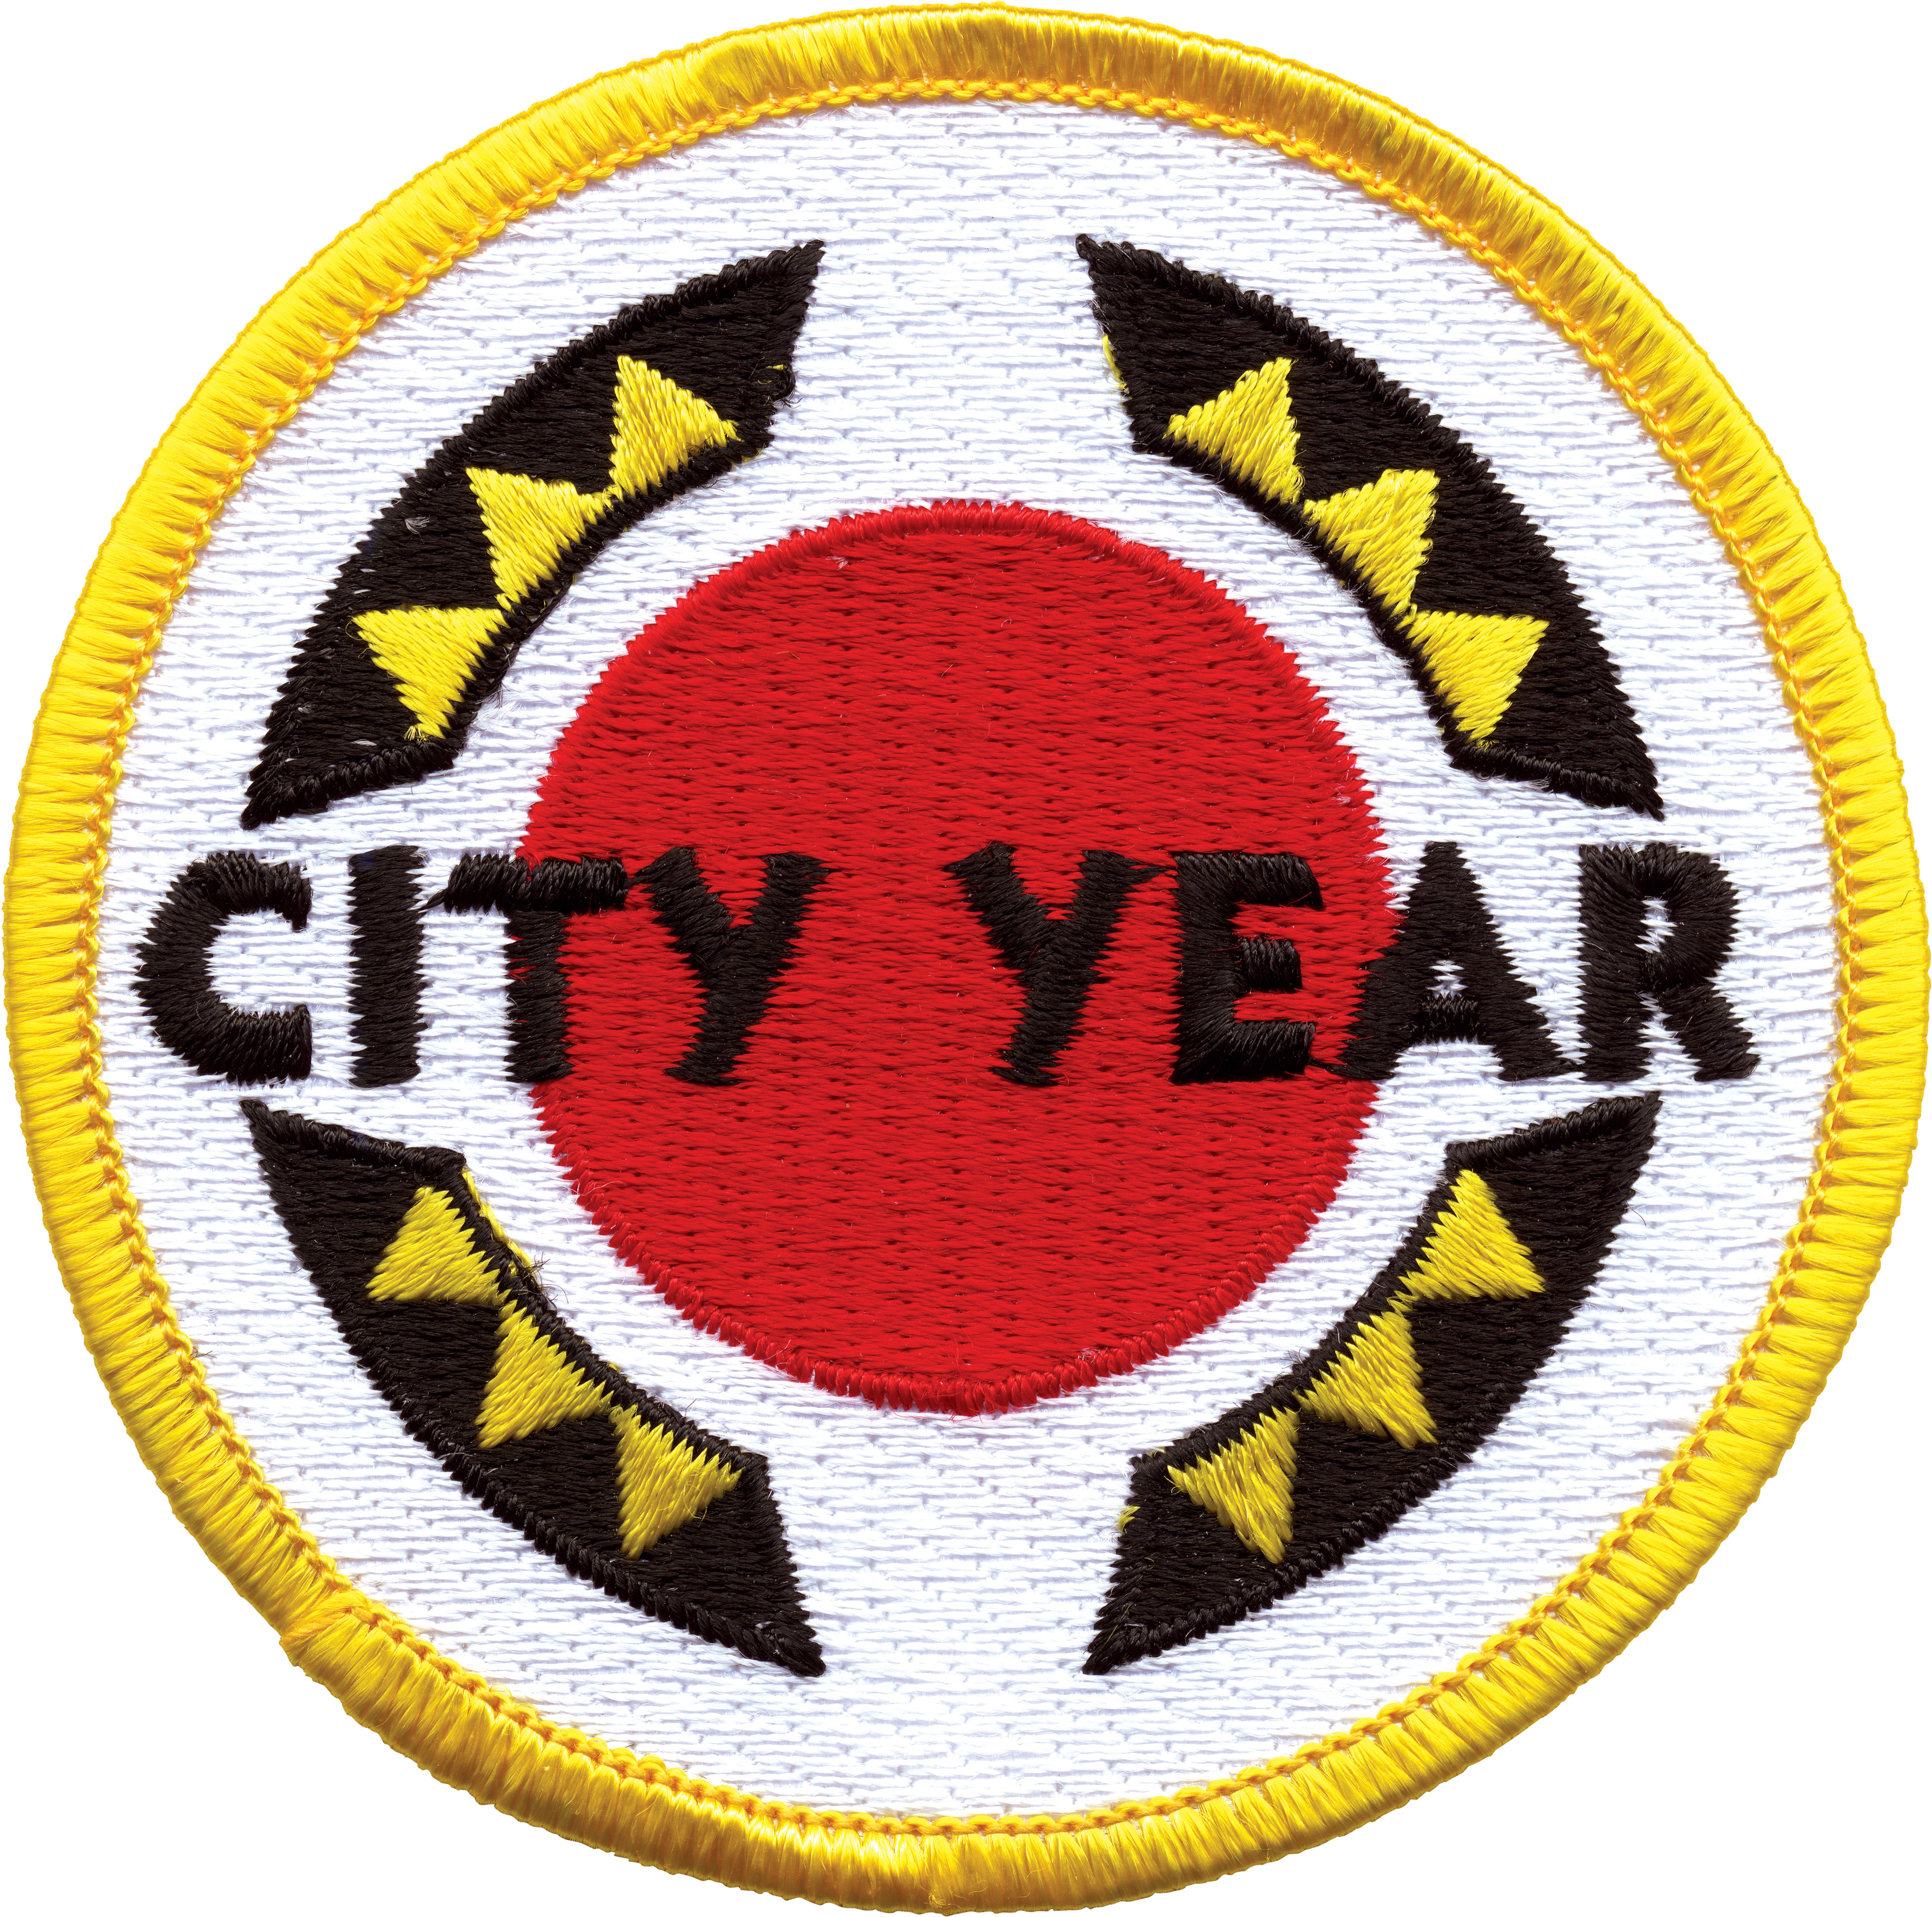 City Year AmeriCorps